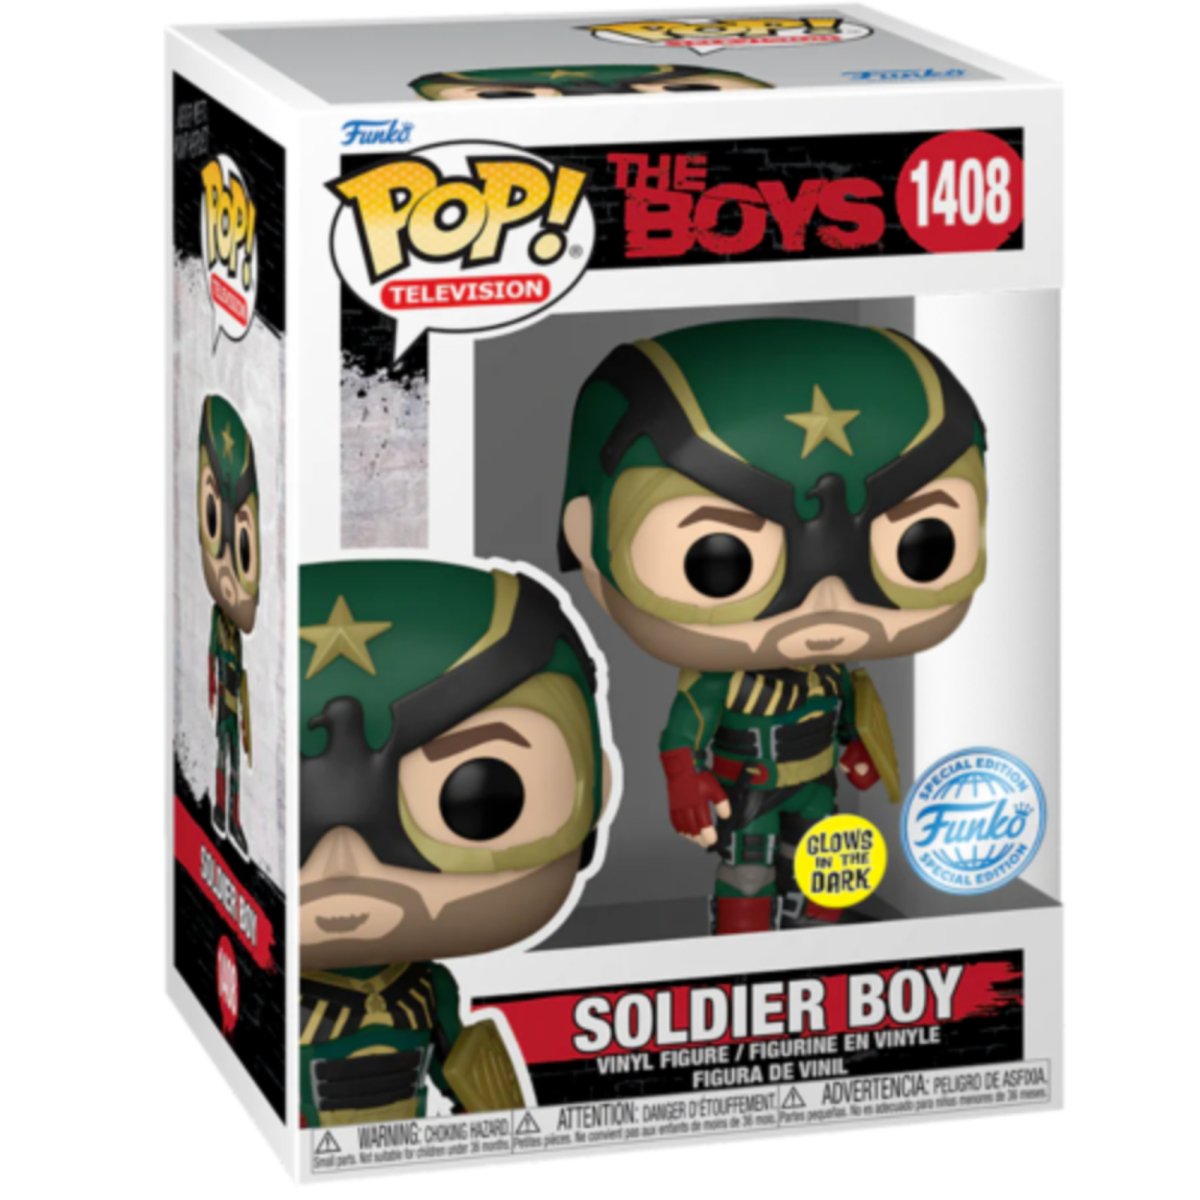 The Boys - Soldier Boy (GITD Special Edition) #1408 - Funko Pop! Vinyl Television - Persona Toys